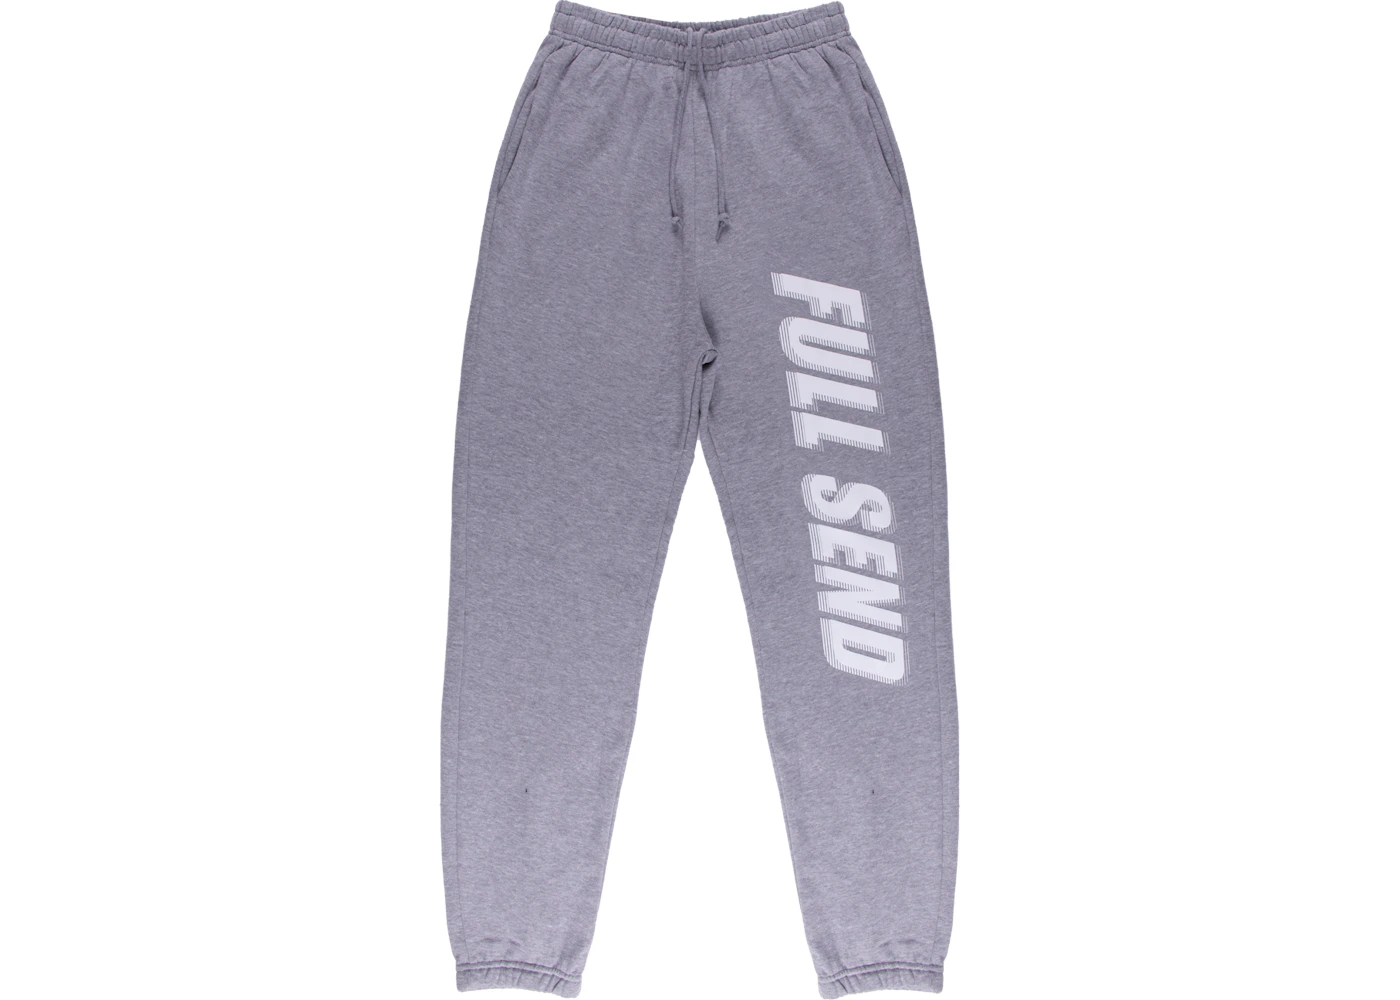 Full Send Glitch Sweatpants Grey - SS21 Men's - US